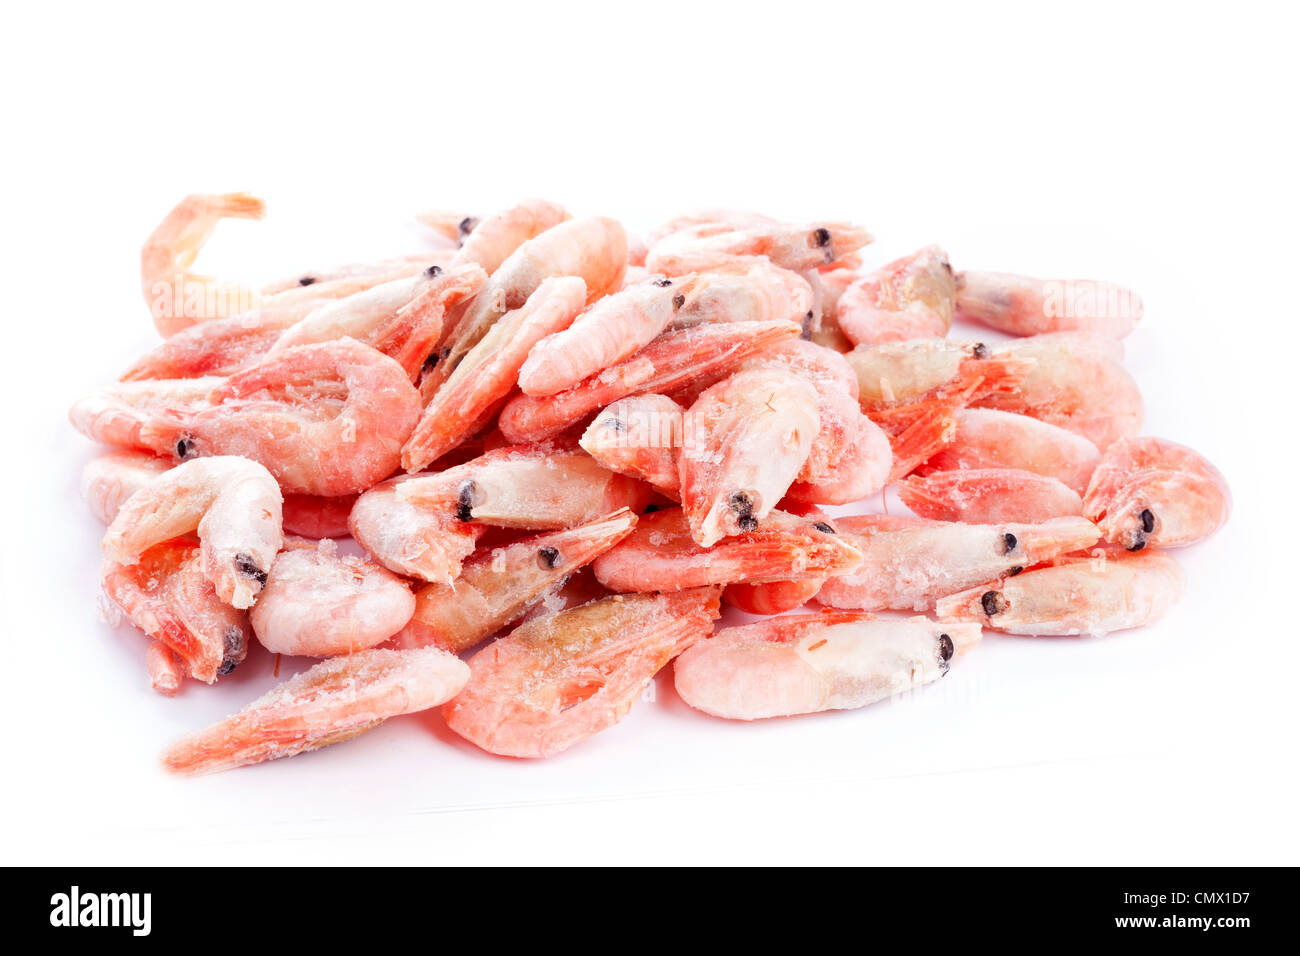 Pile of boiled shrimps, isolated on white background Stock Photo